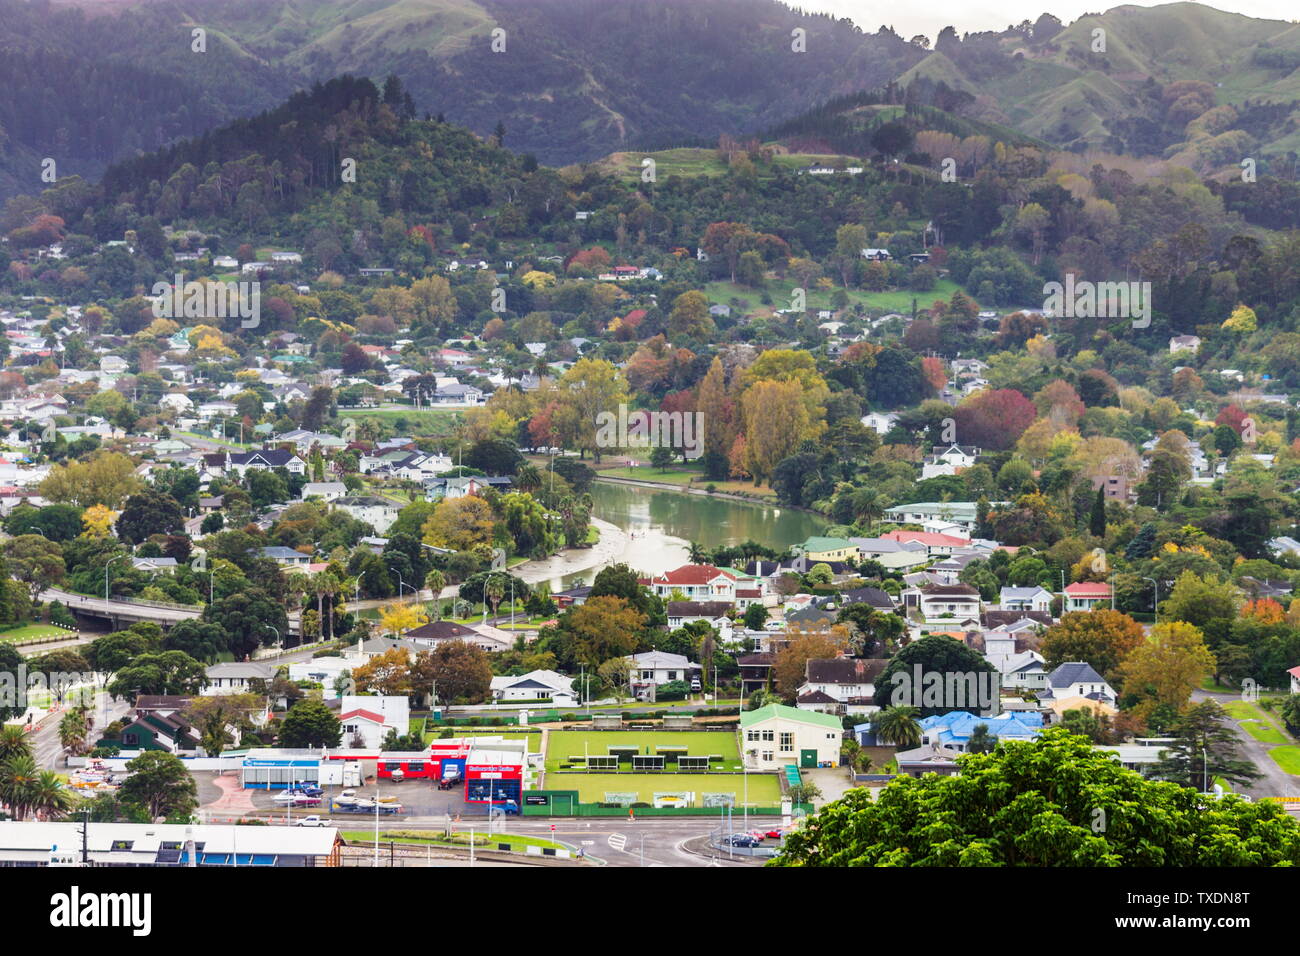 Gisborne, New Zealand - April 24th, 2017: Gisborne is a city on the east coast of New Zealand’s North Island. Stock Photo